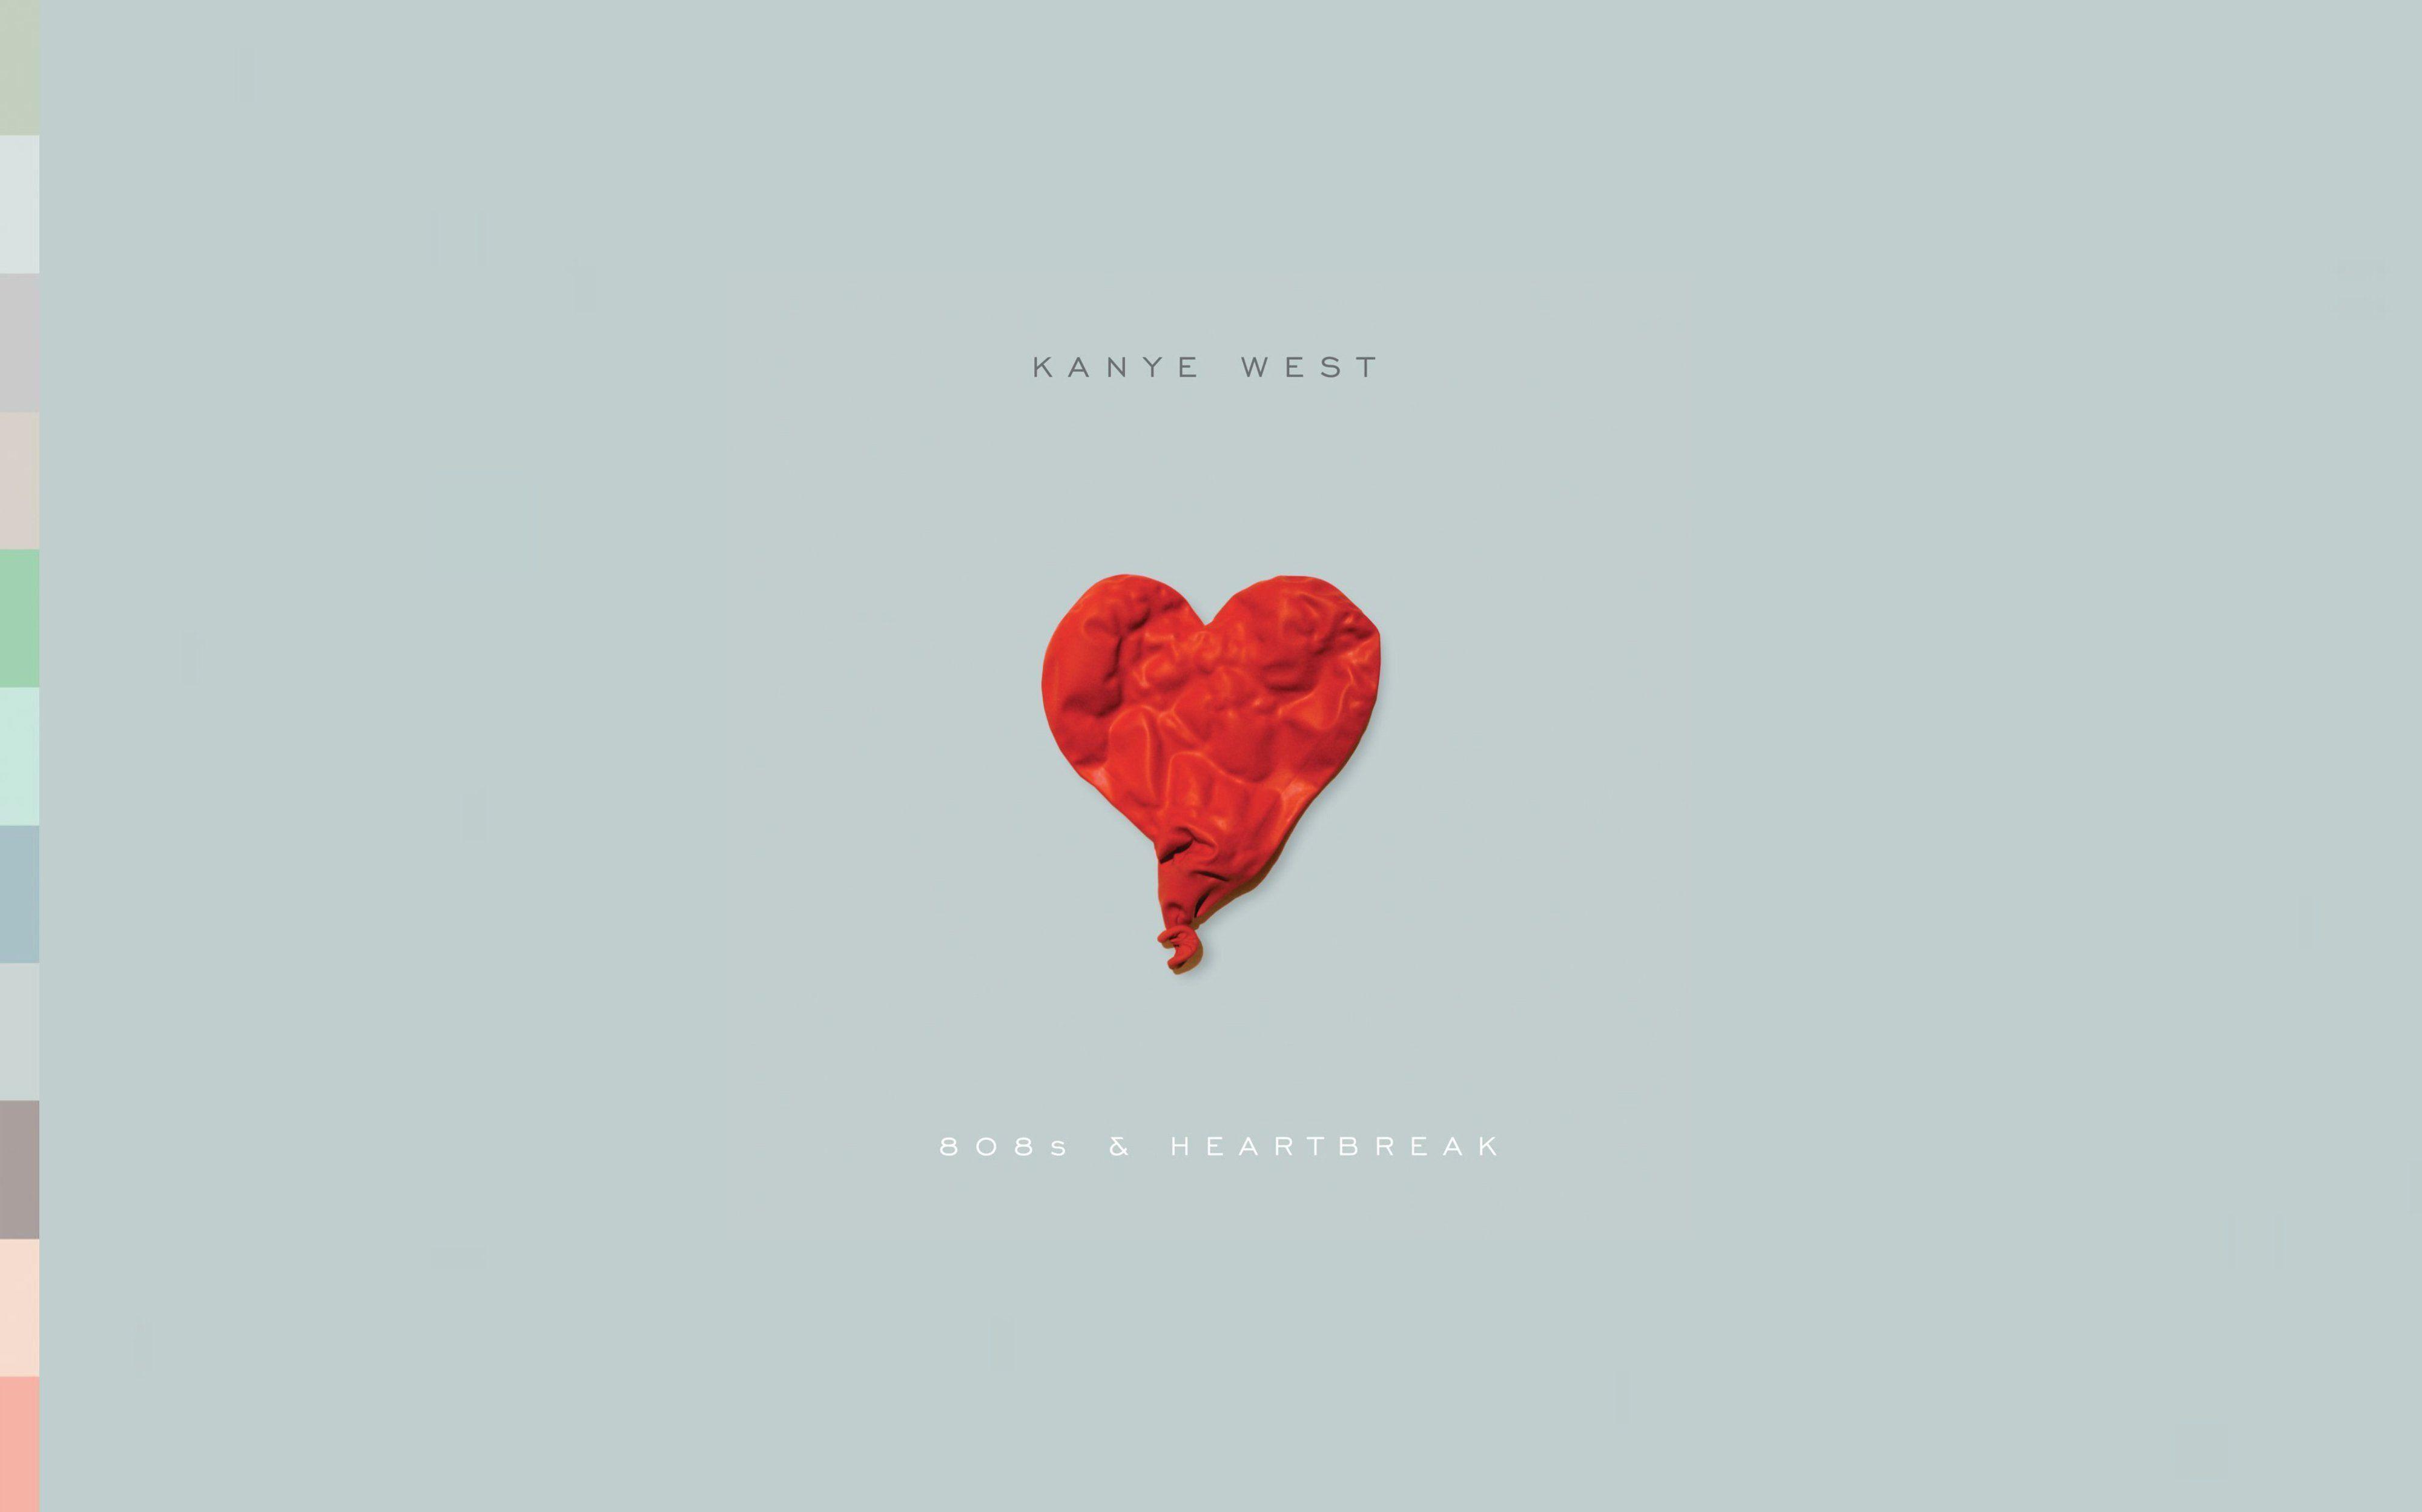 808s and heartbreak first week sales